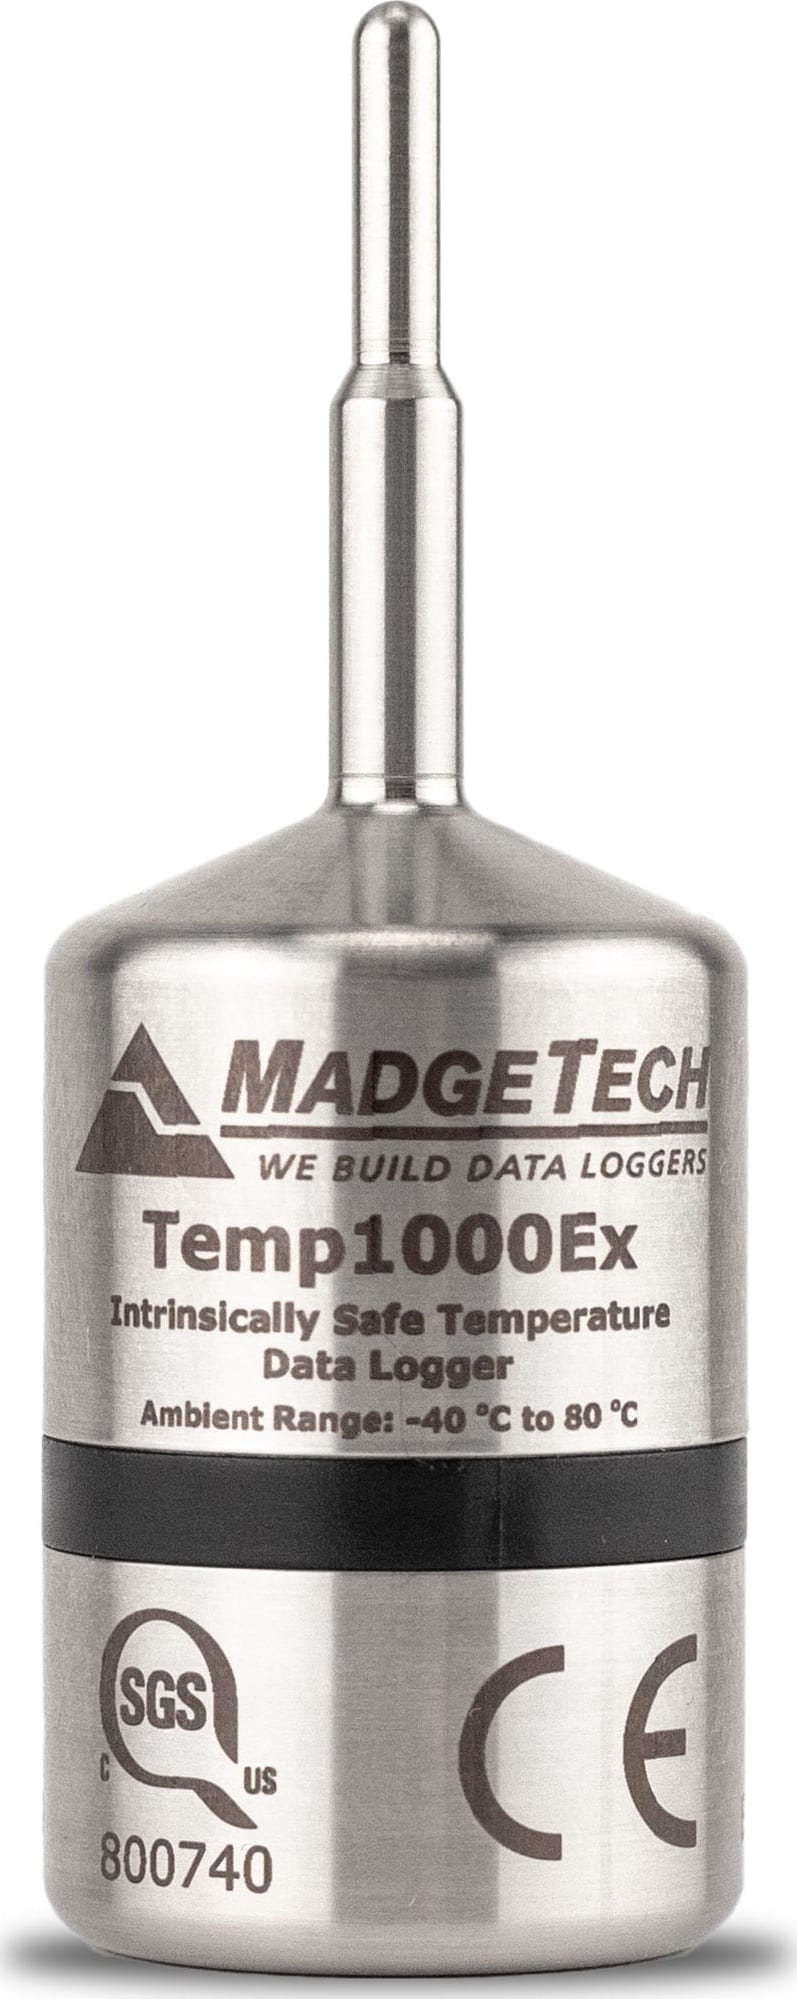 Madgetech Temp1000Ex - Data Logger